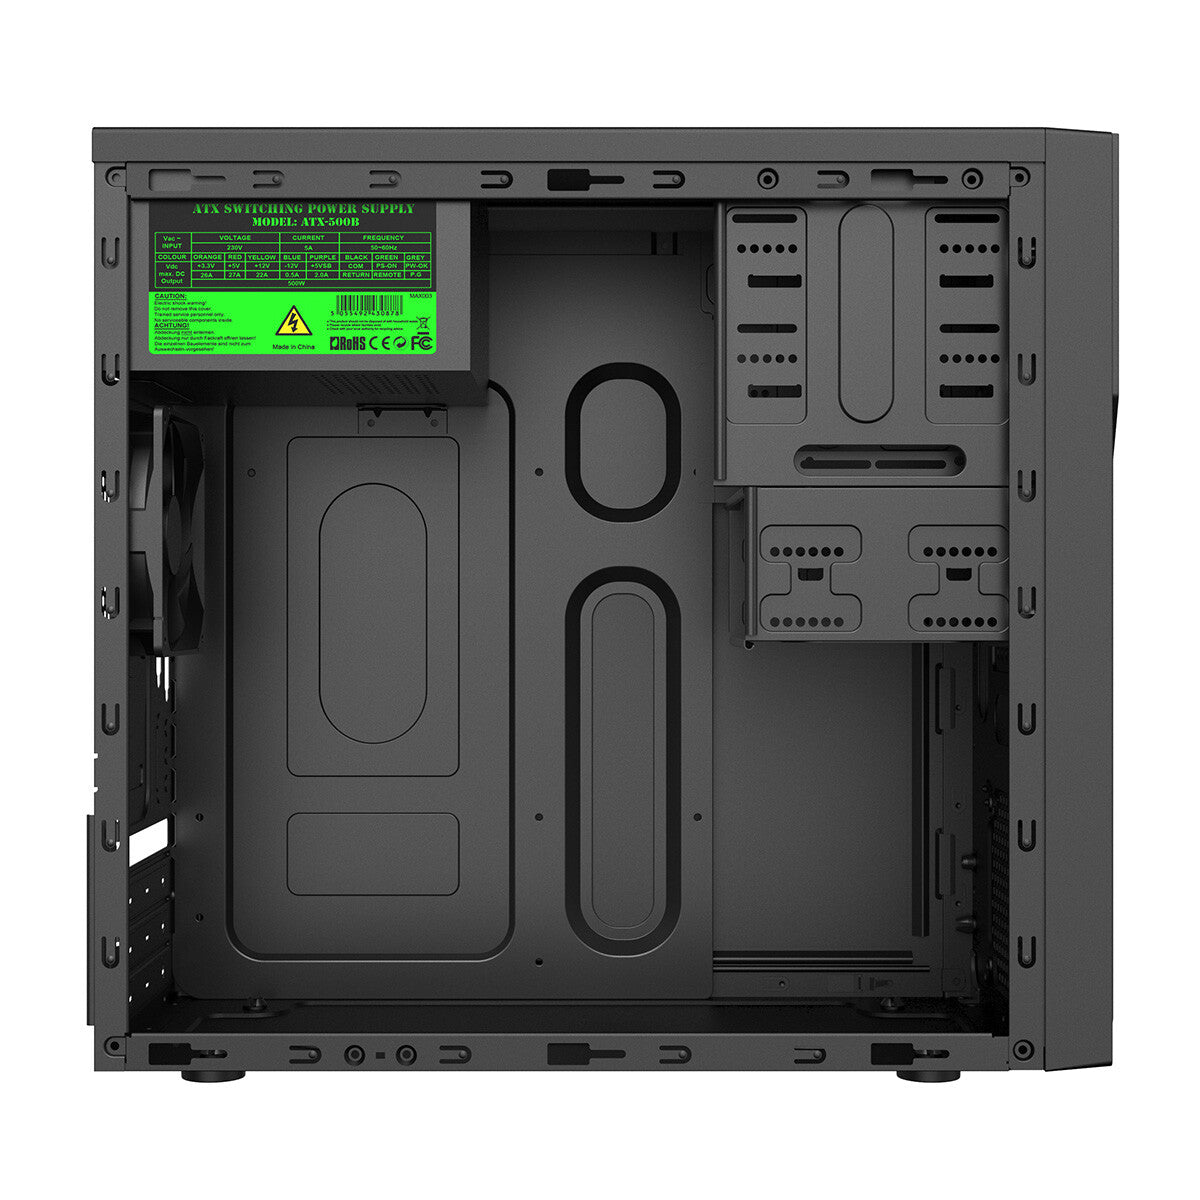 CiT CLASSIC MICRO - MicroATX Mid Tower Case in Black w/ 500W PSU